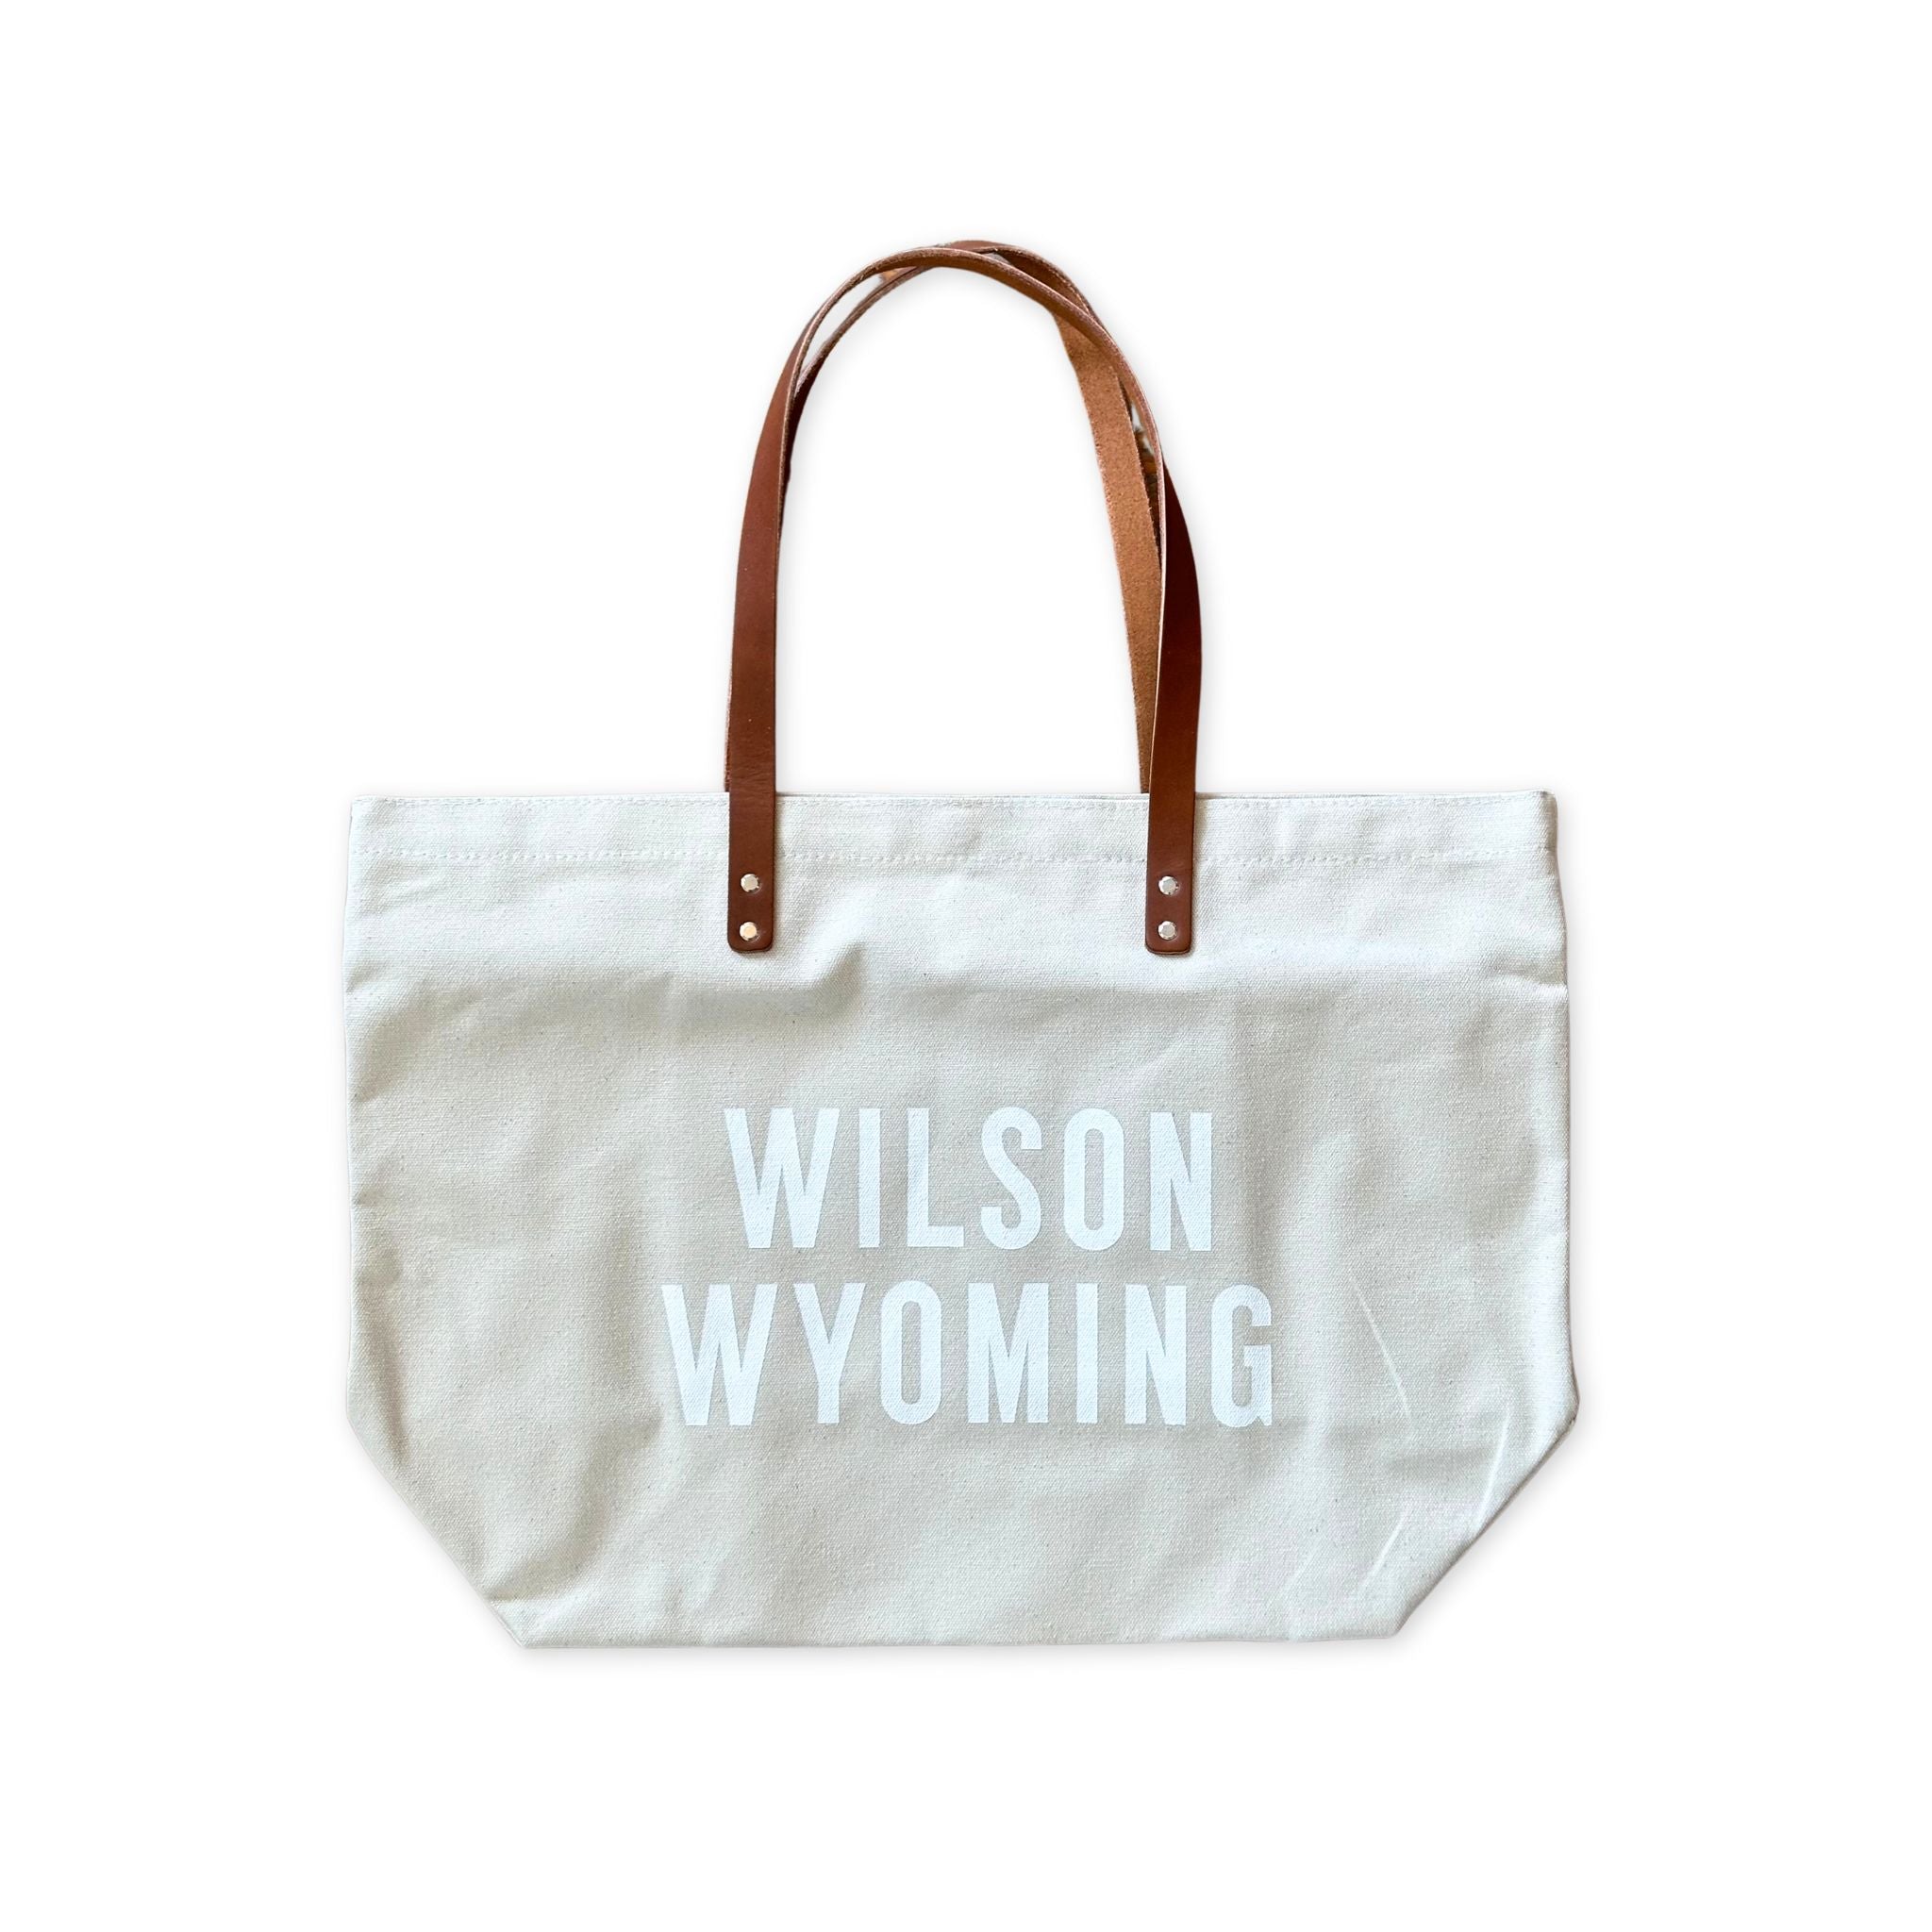 Wilson, Wyoming Tote